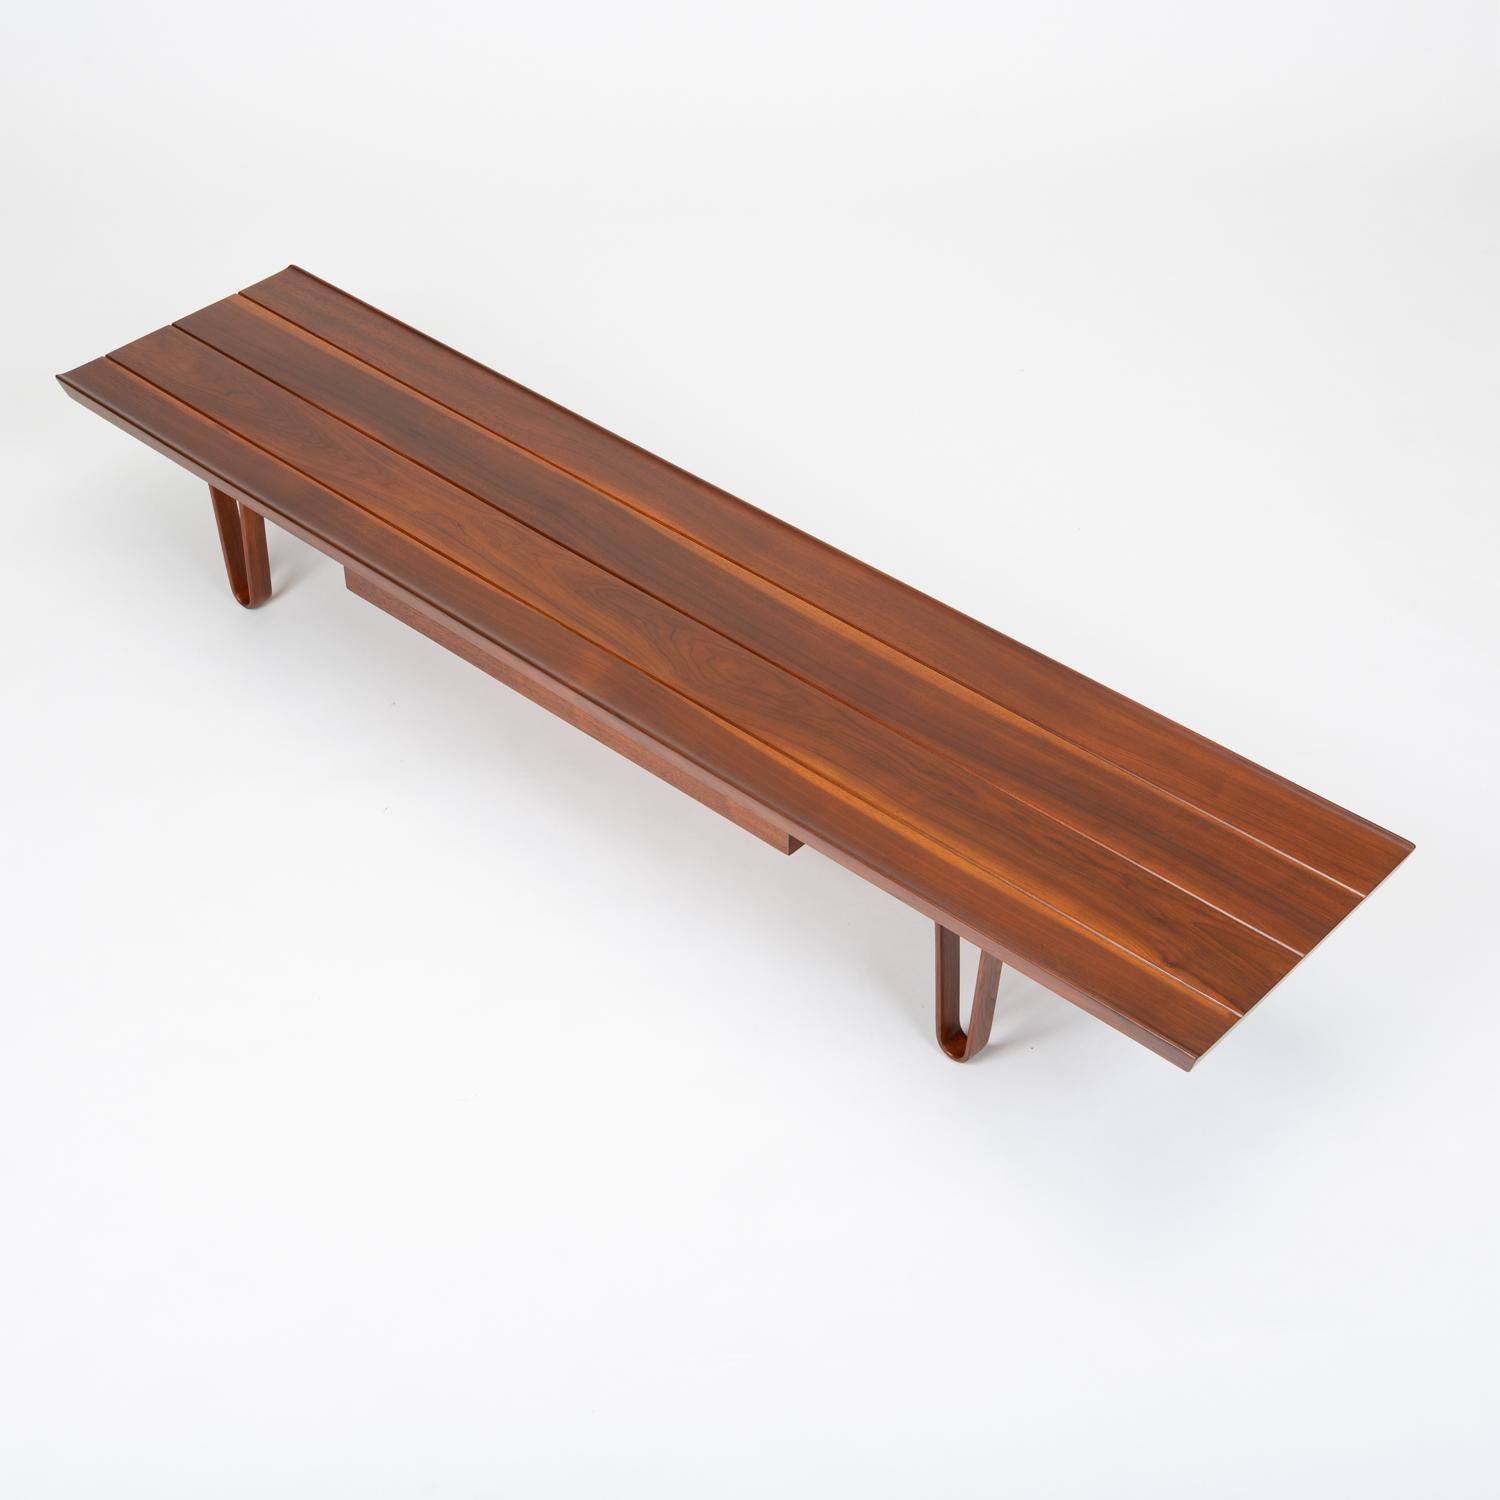 Walnut “Long John” Bench or Coffee Table by Edward Wormley for Dunbar 1